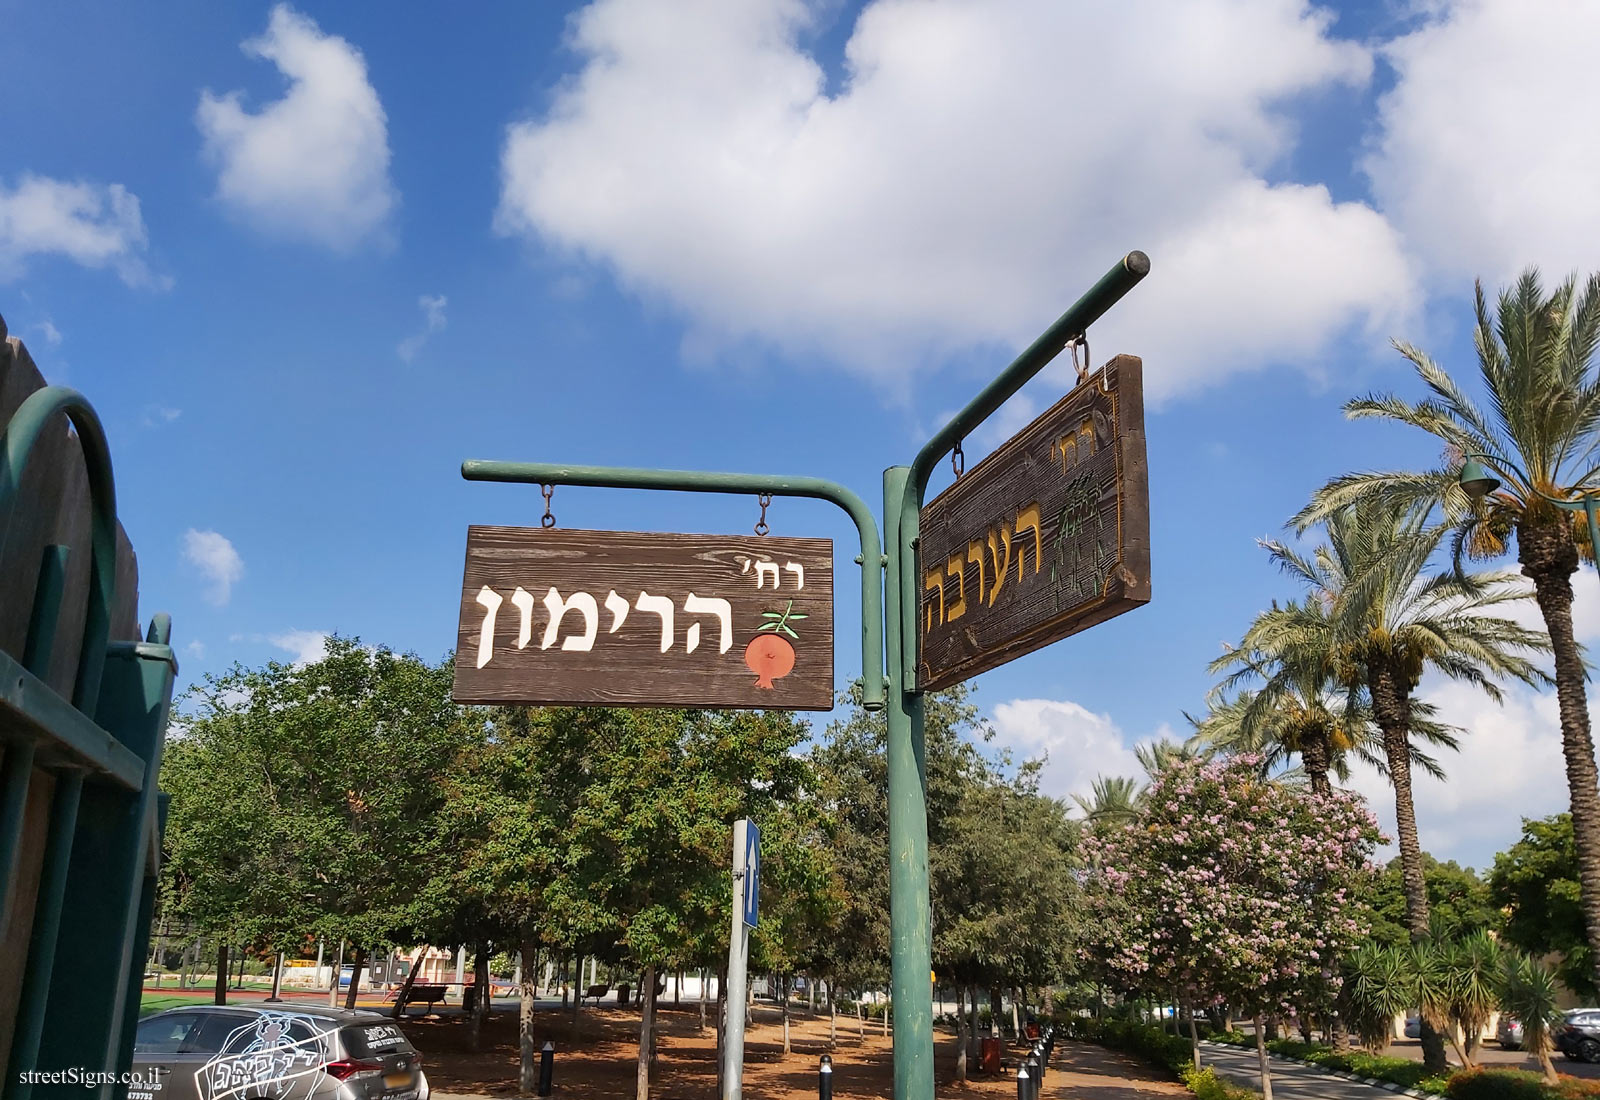 Tzur Moshe - The intersection of Harimon Street and Arava Street